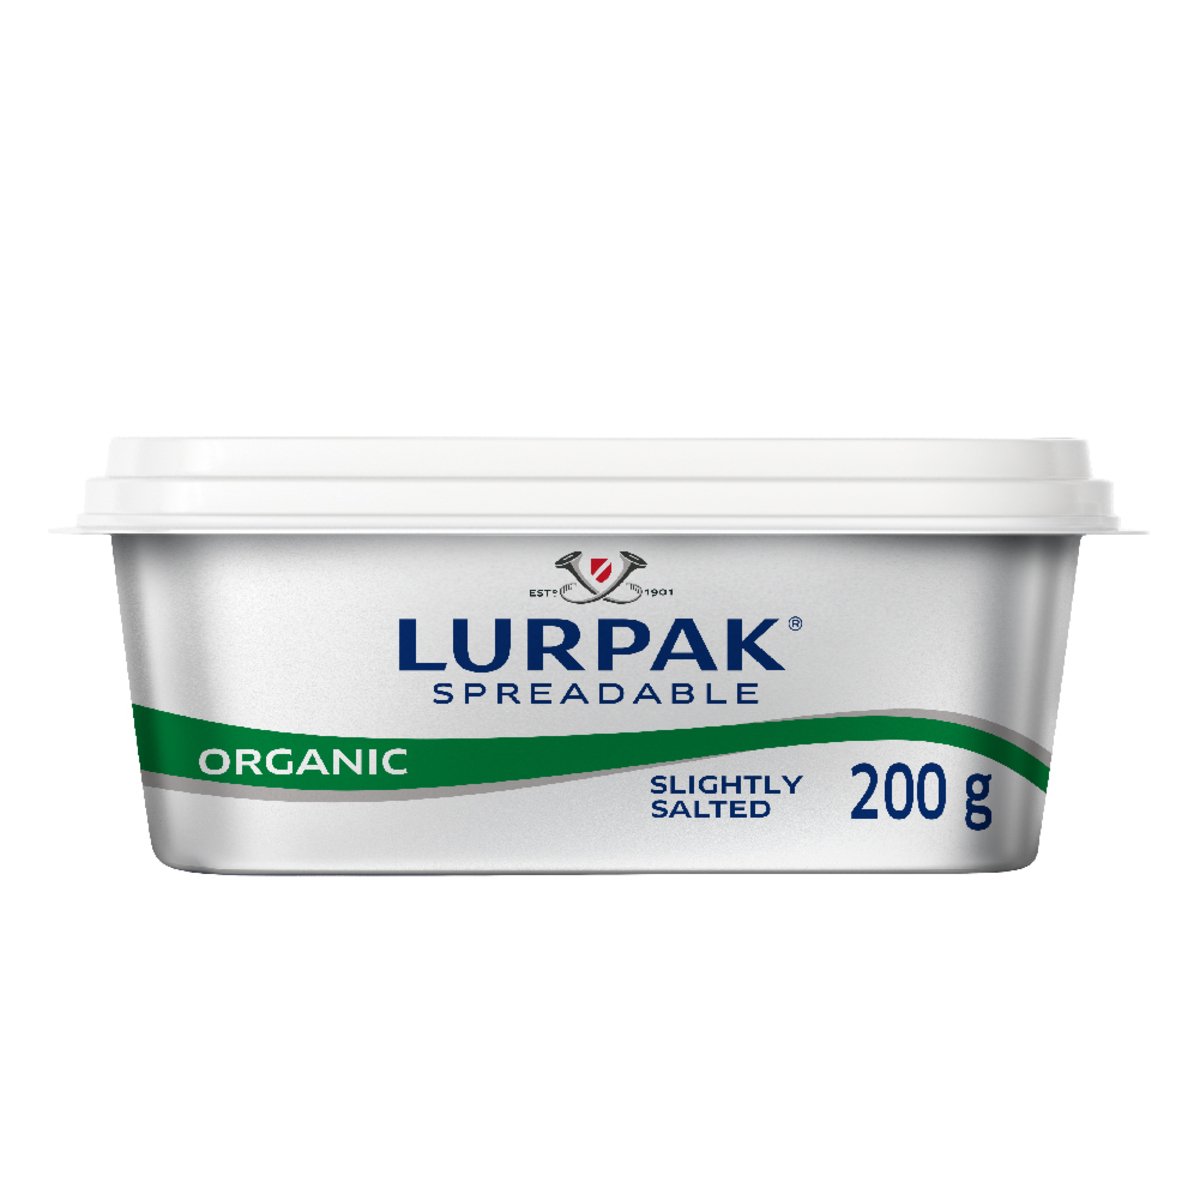 Lurpak Organic Butter Spreadable Slightly Salted 200g Online at